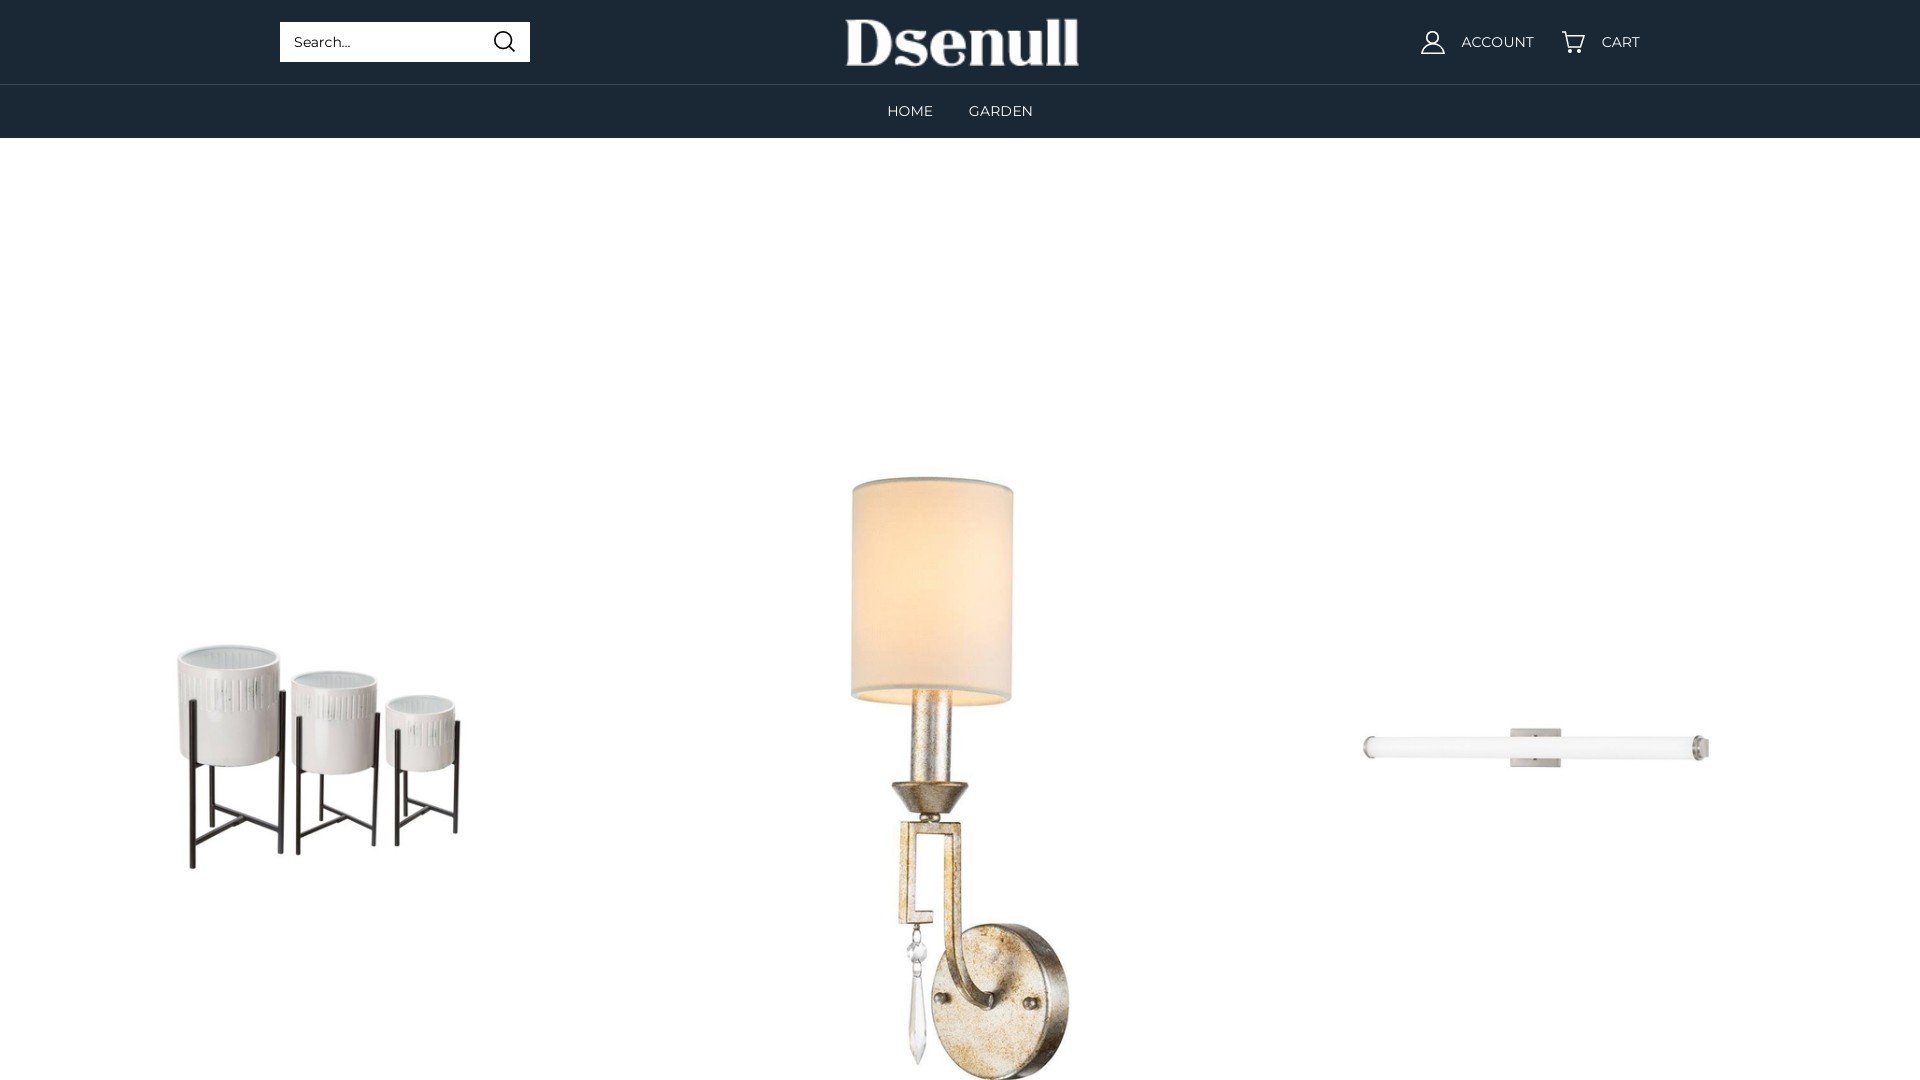 Dsenull at dsenull.com